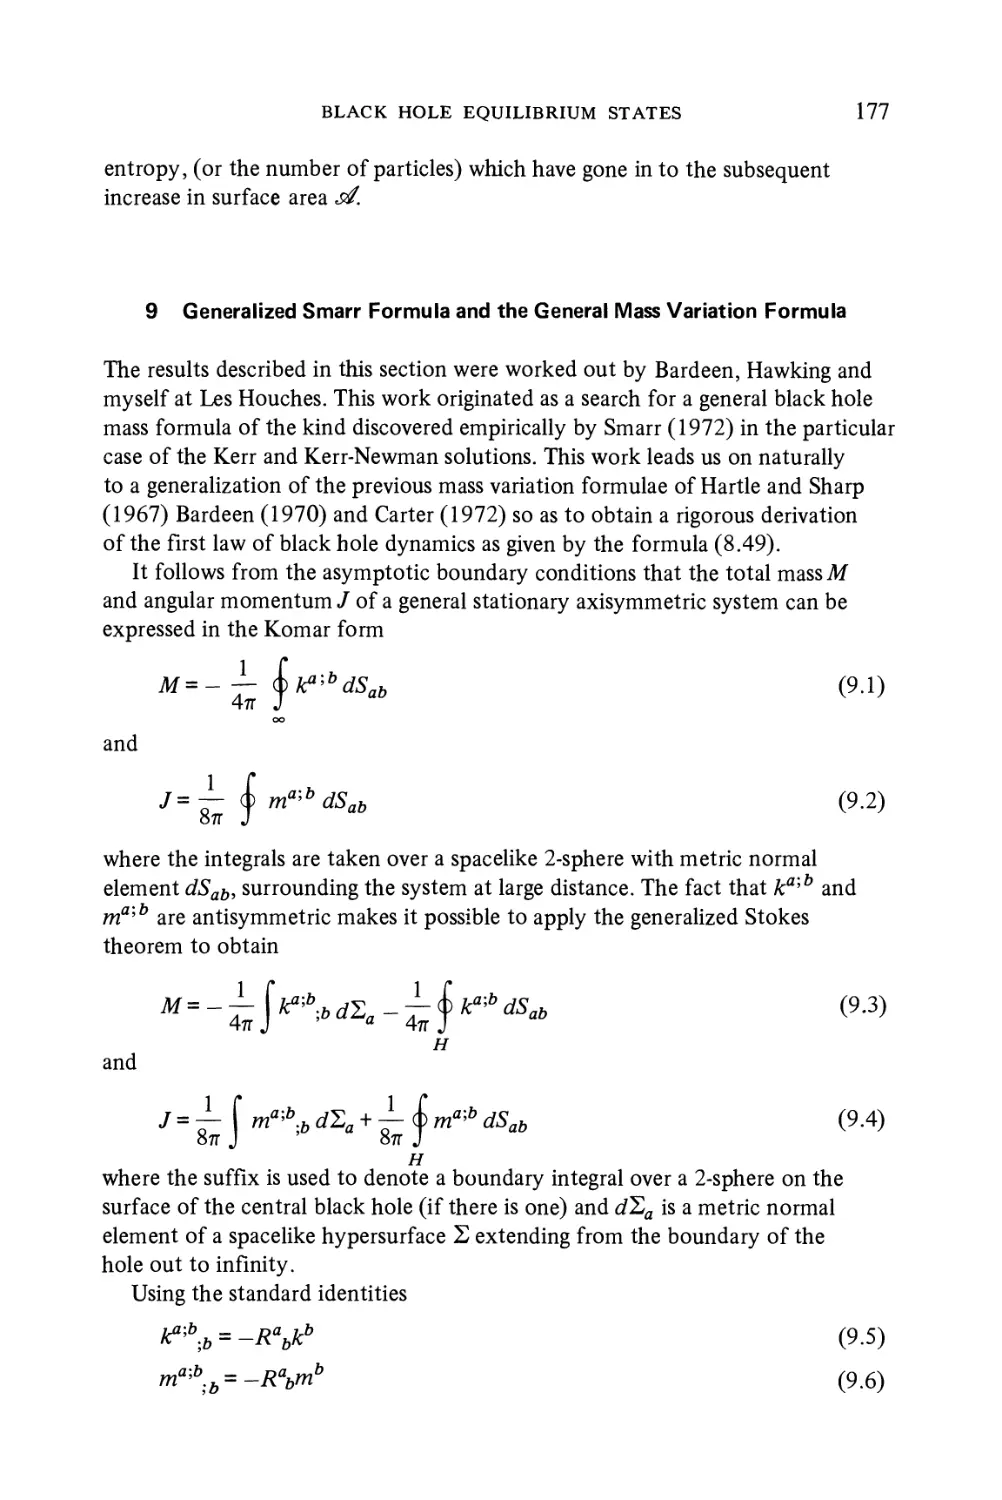 9 Generalized Smarr Formula and the General Mass Variation Formula